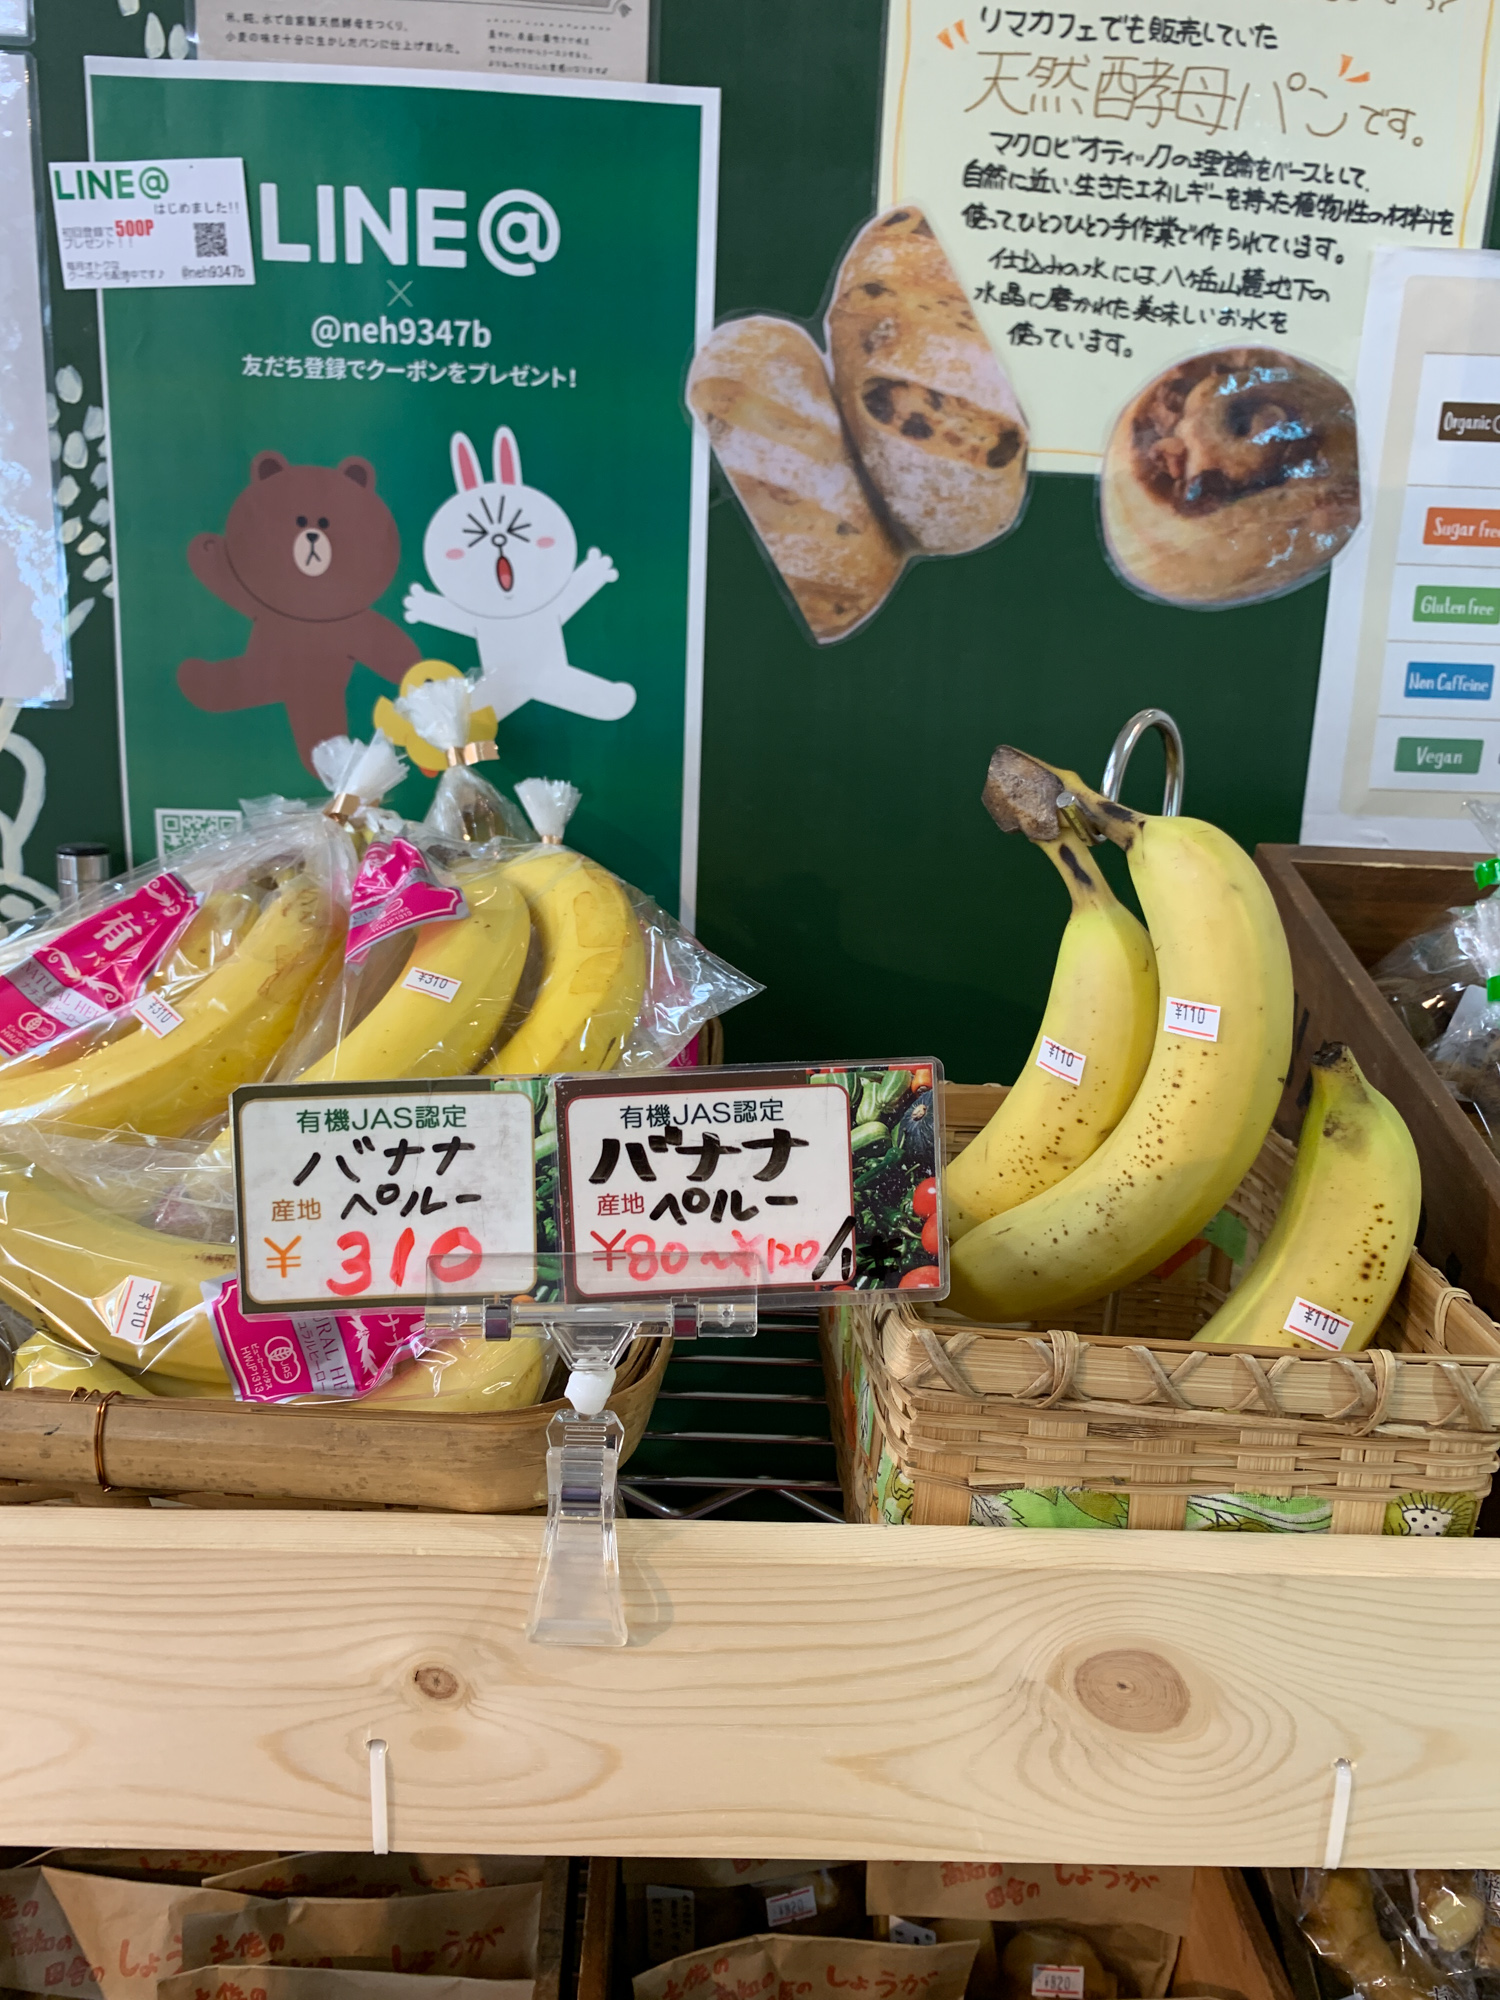 Organic in Tokyo